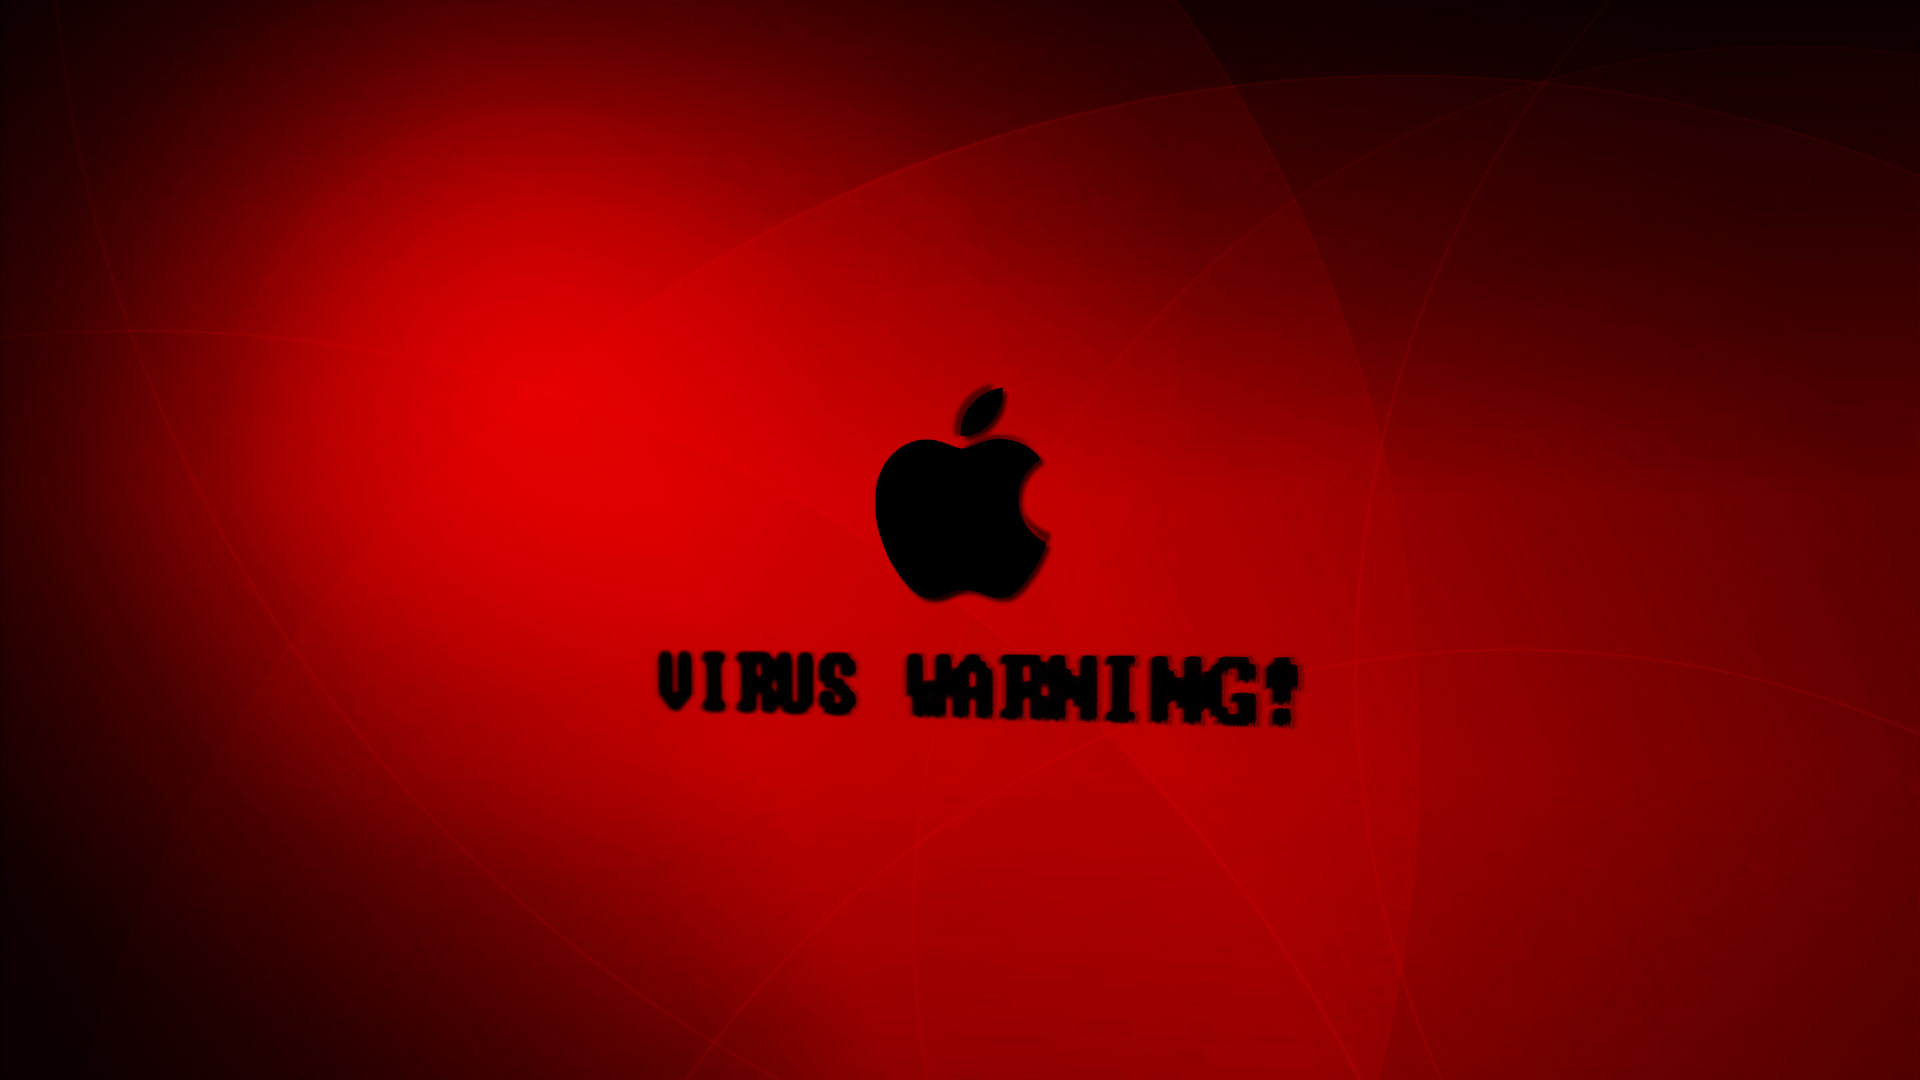 Virus Warning 1920x1080 HD Image Computers